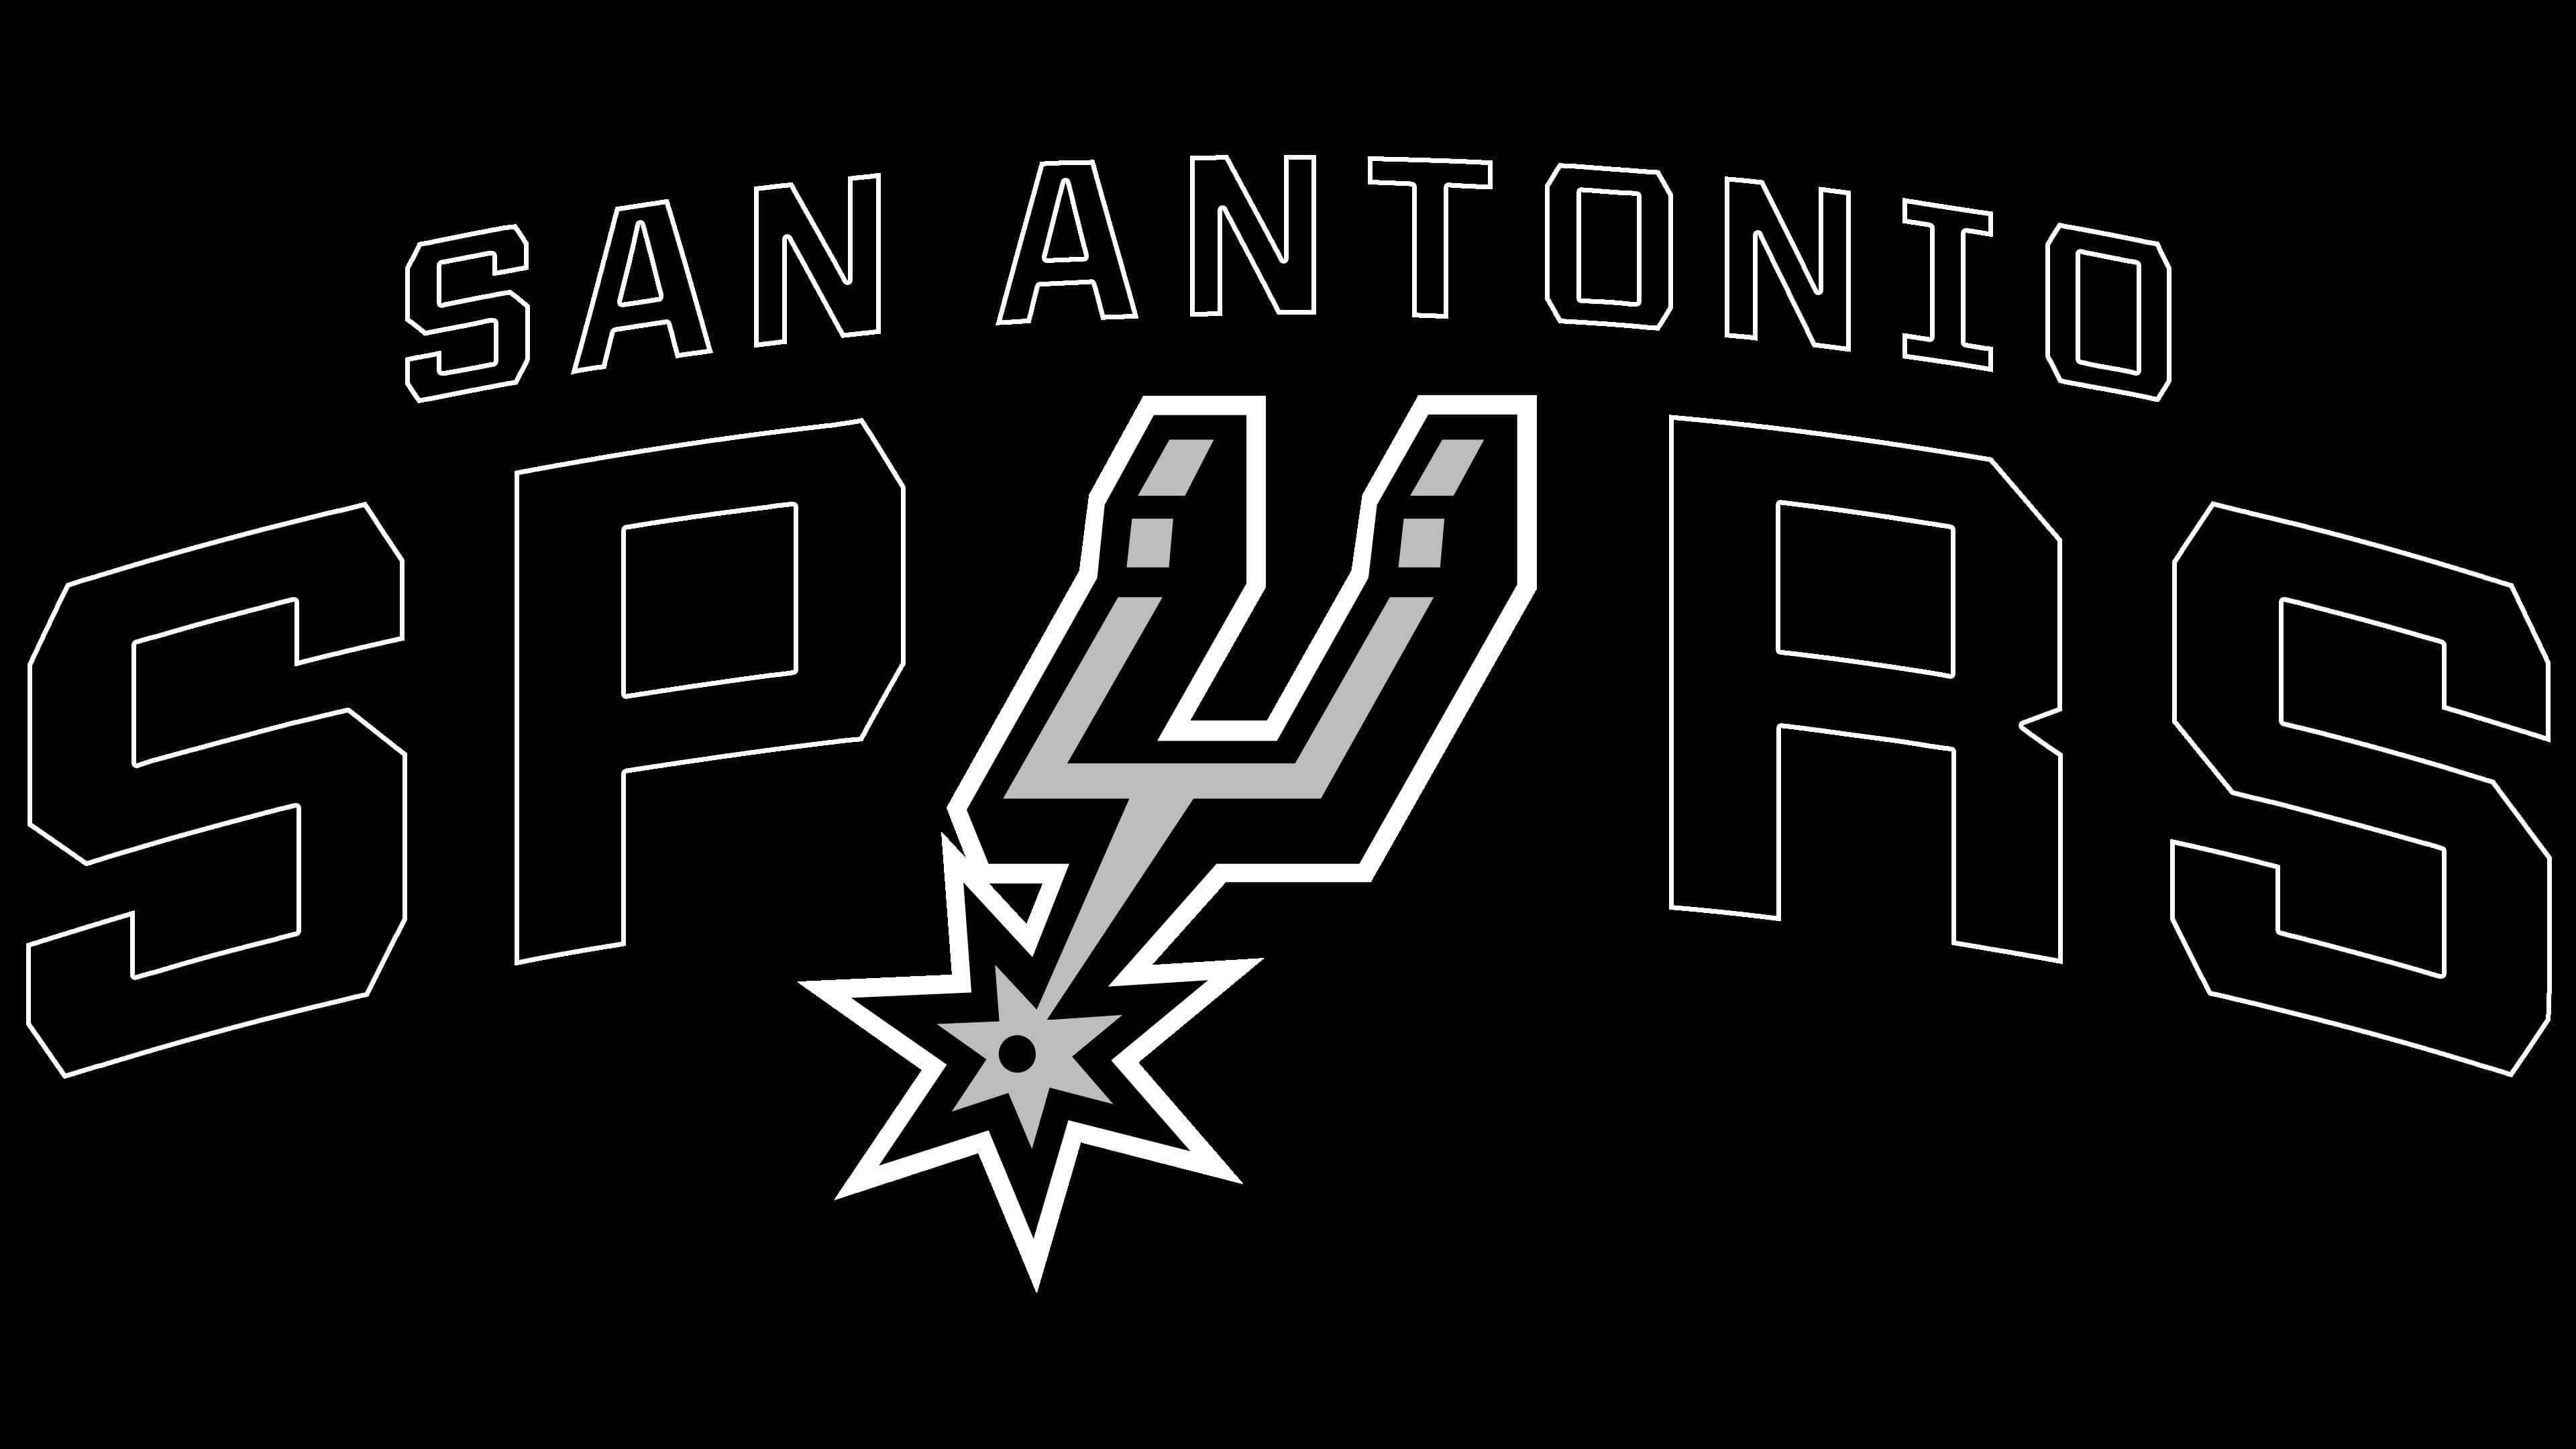 San Antonio Spurs 4k Ultra HD Wallpaper